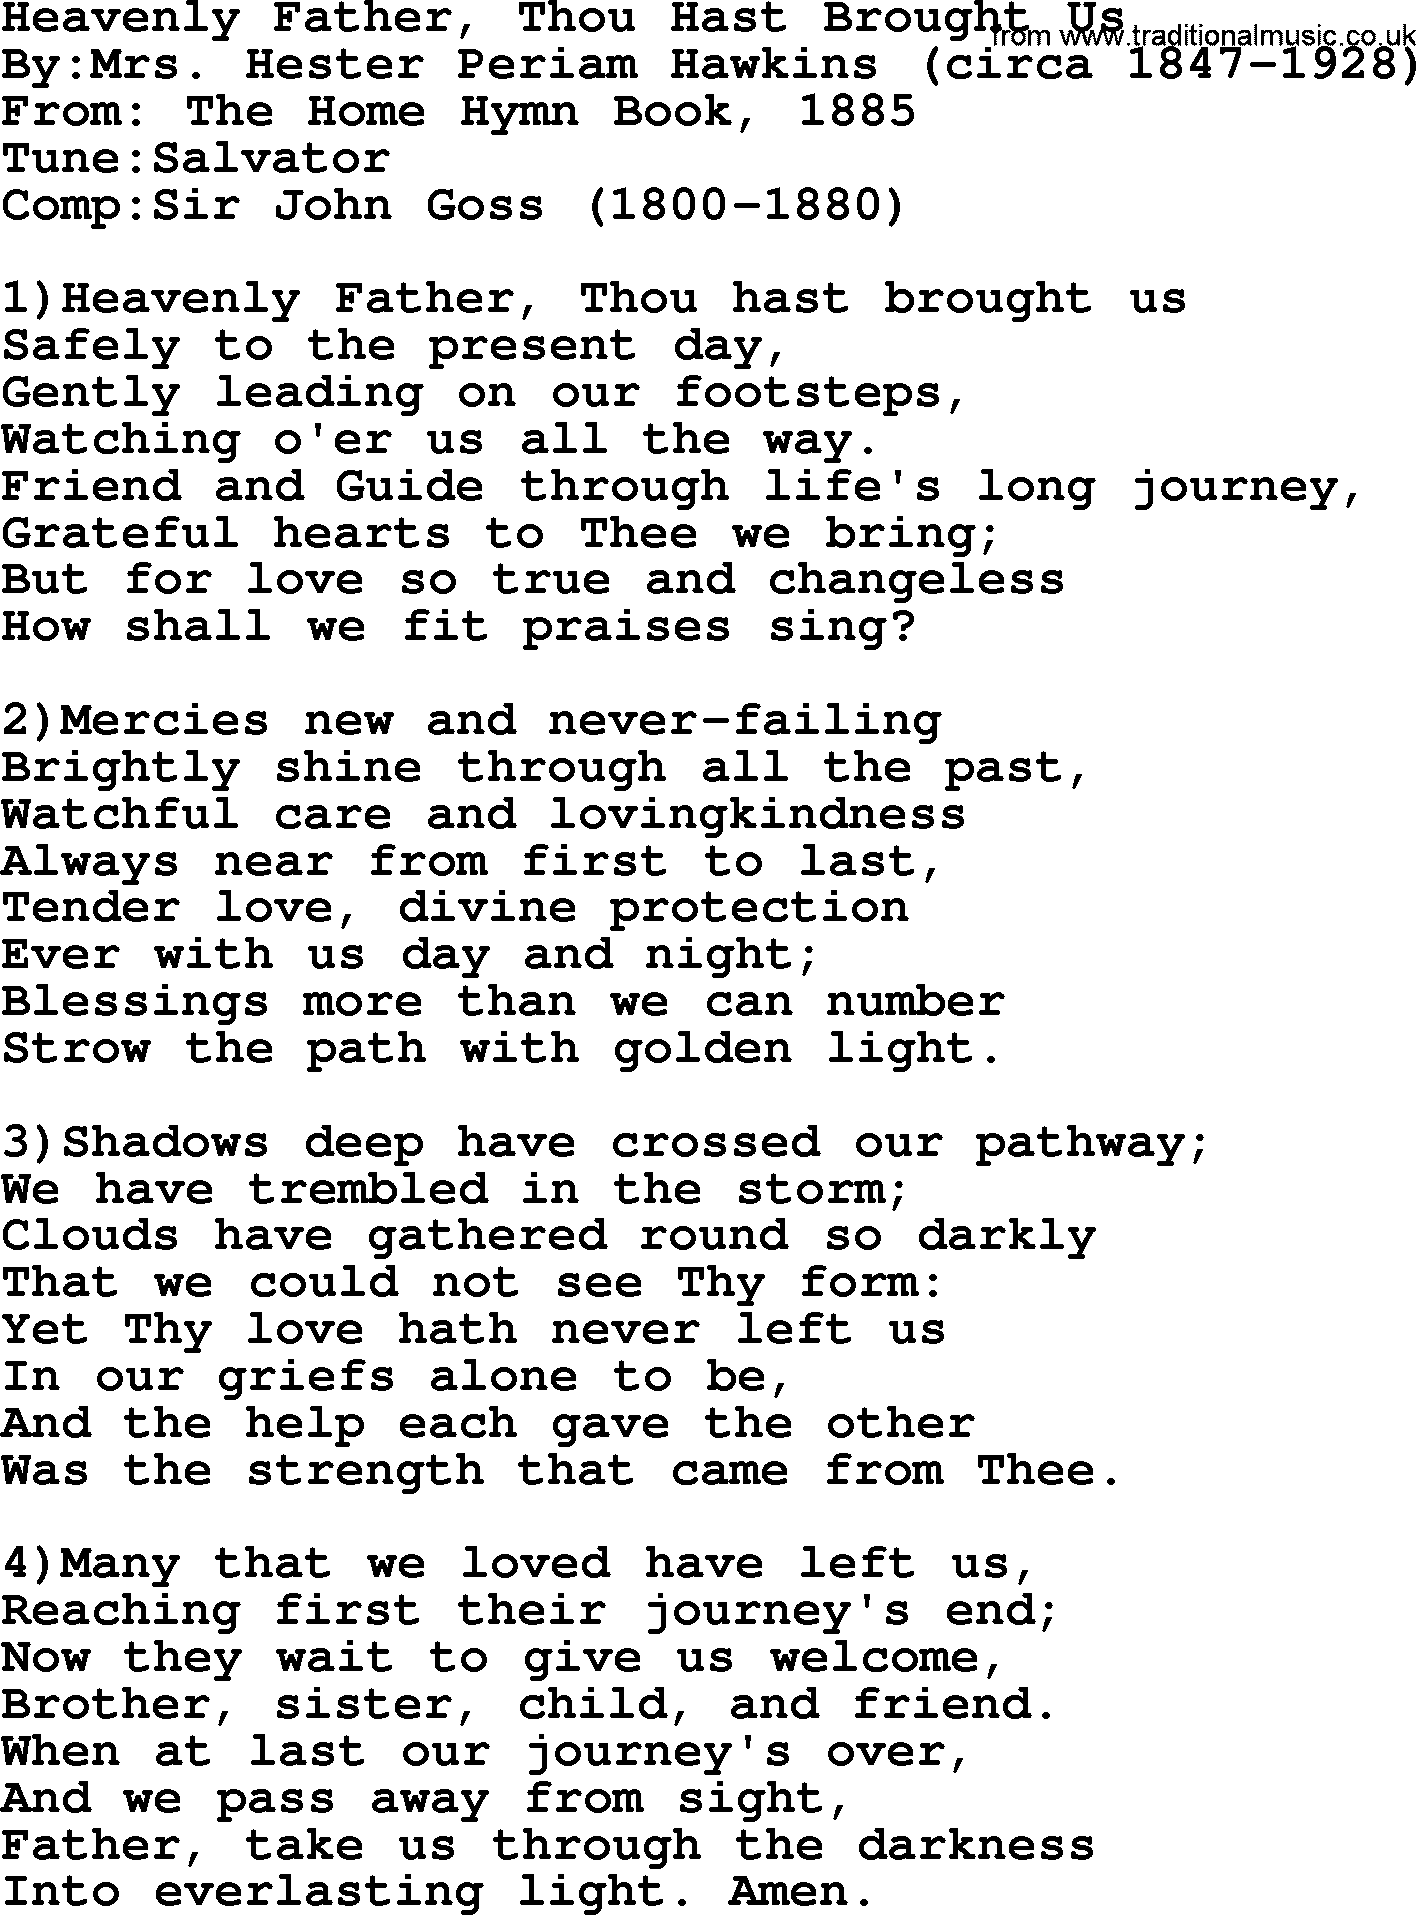 Methodist Hymn: Heavenly Father, Thou Hast Brought Us, lyrics